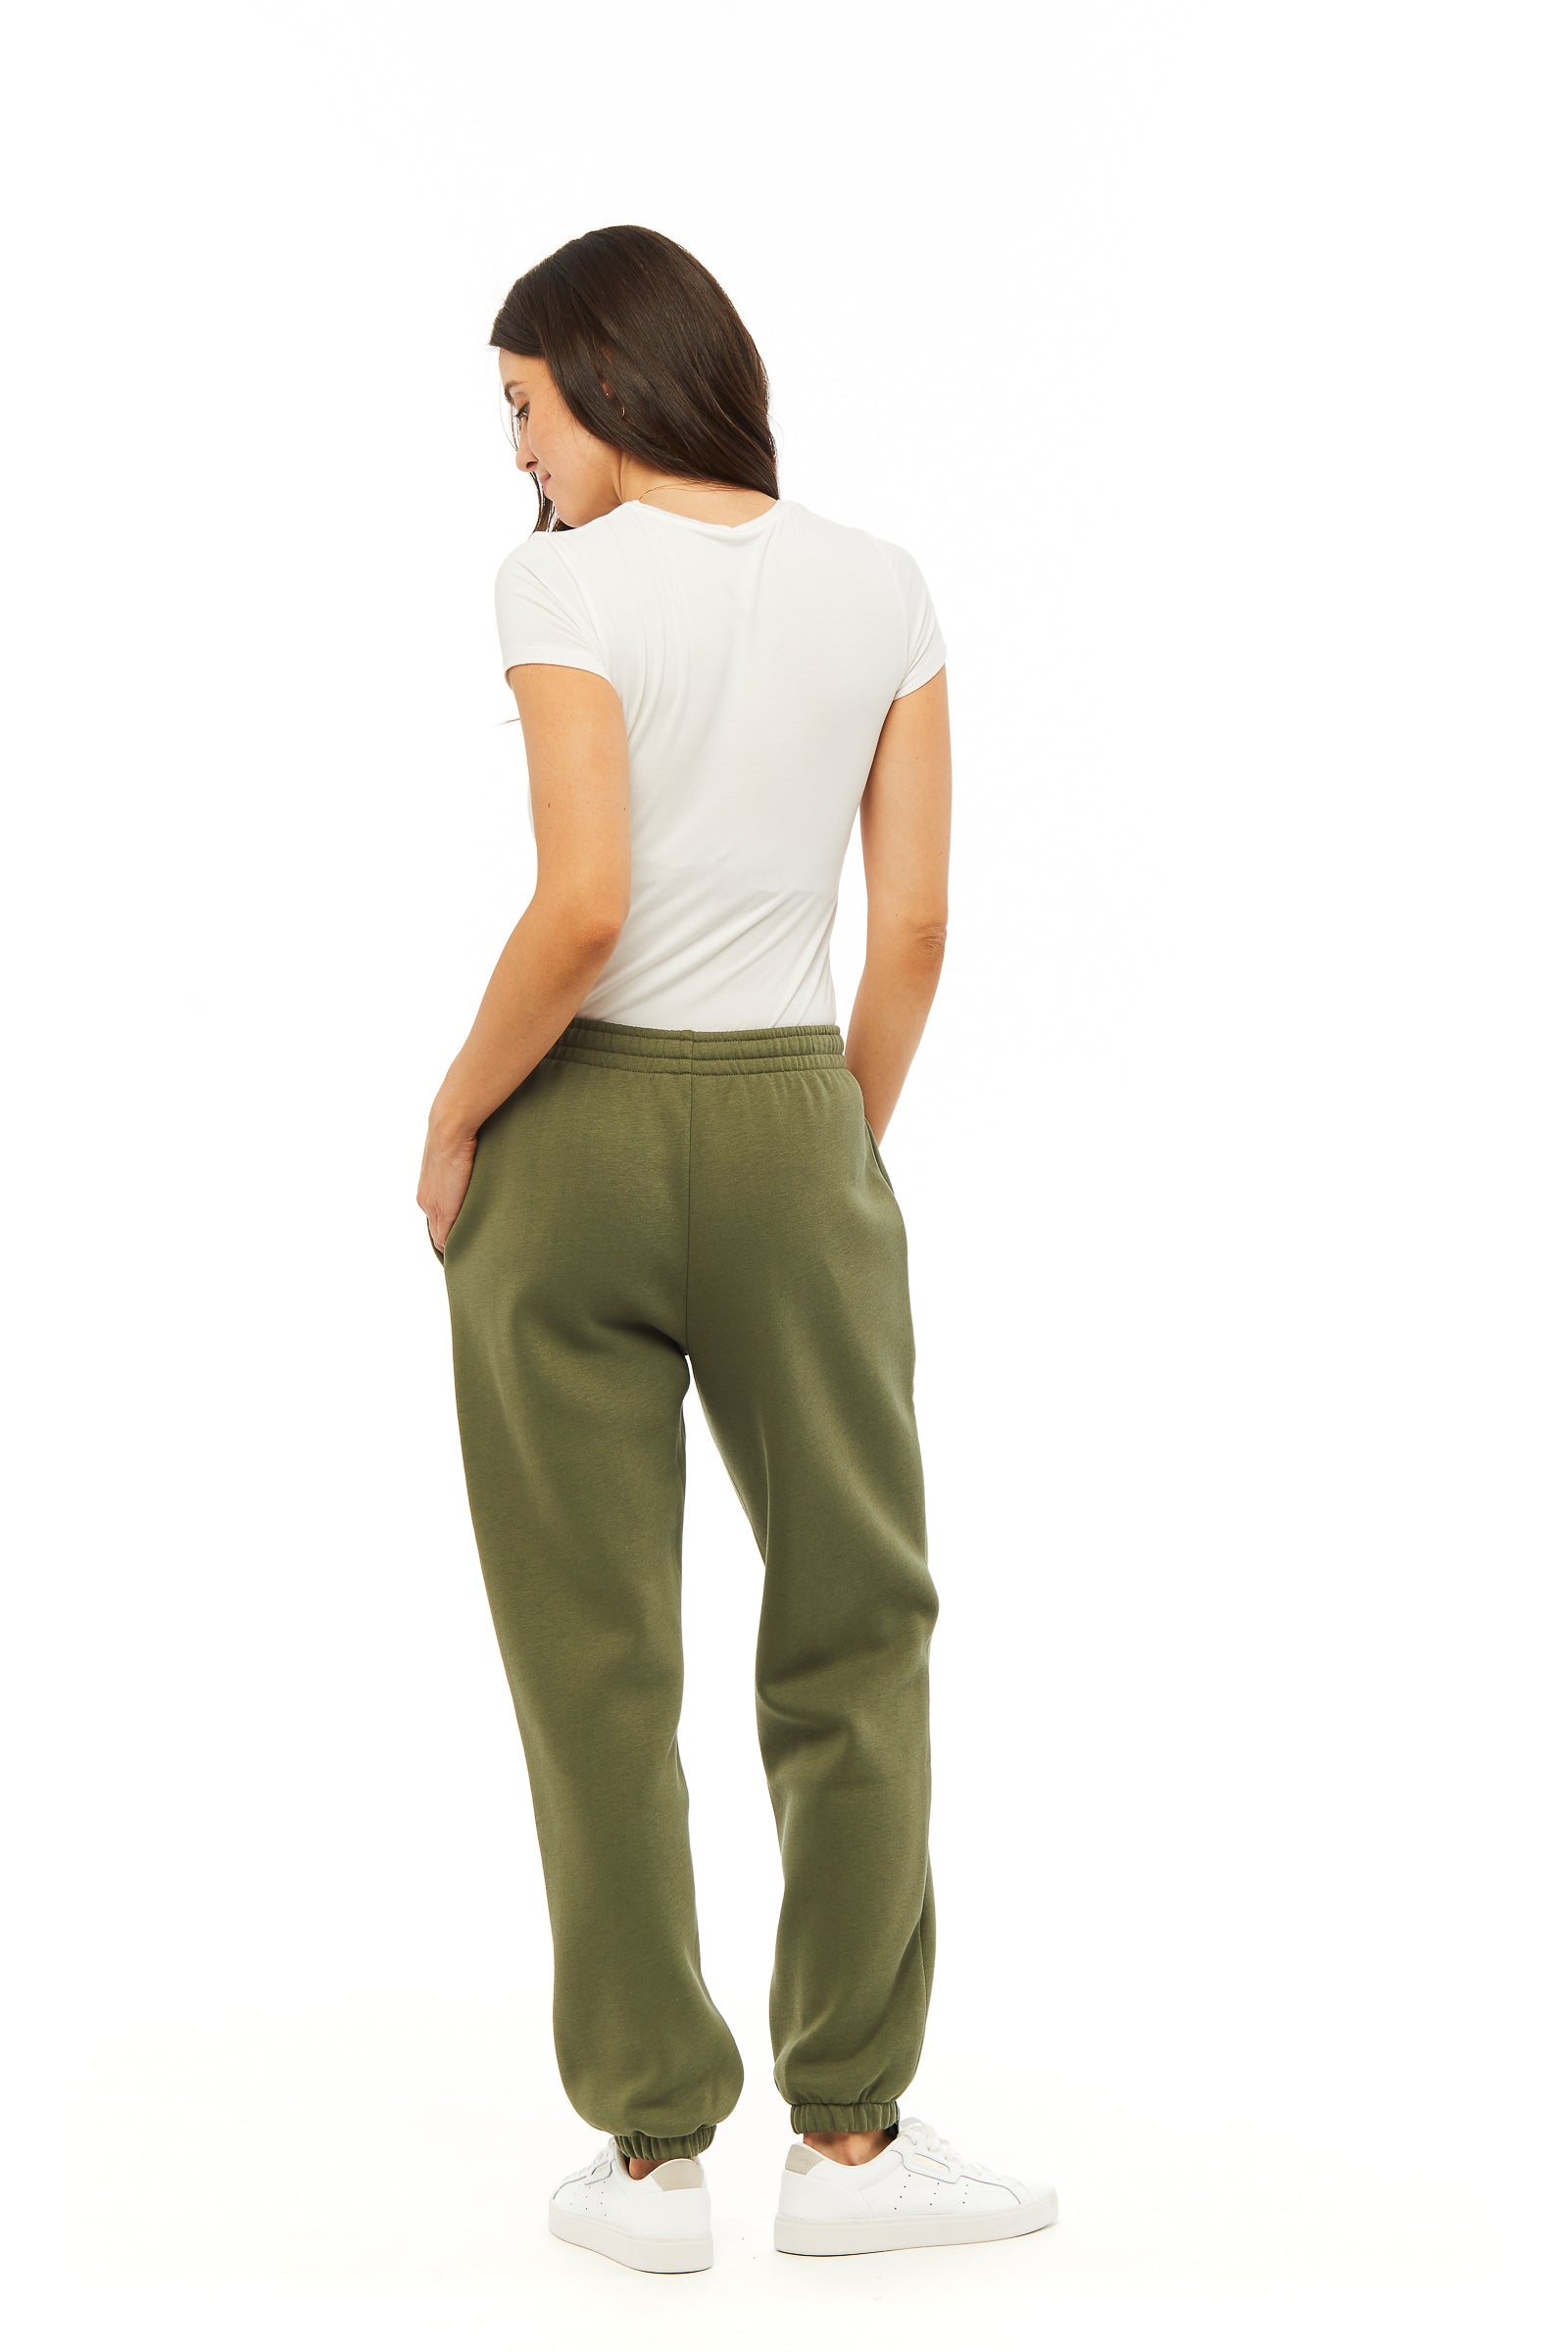 Buy Women Olive Regular Fit Solid Casual Jogger Pants Online